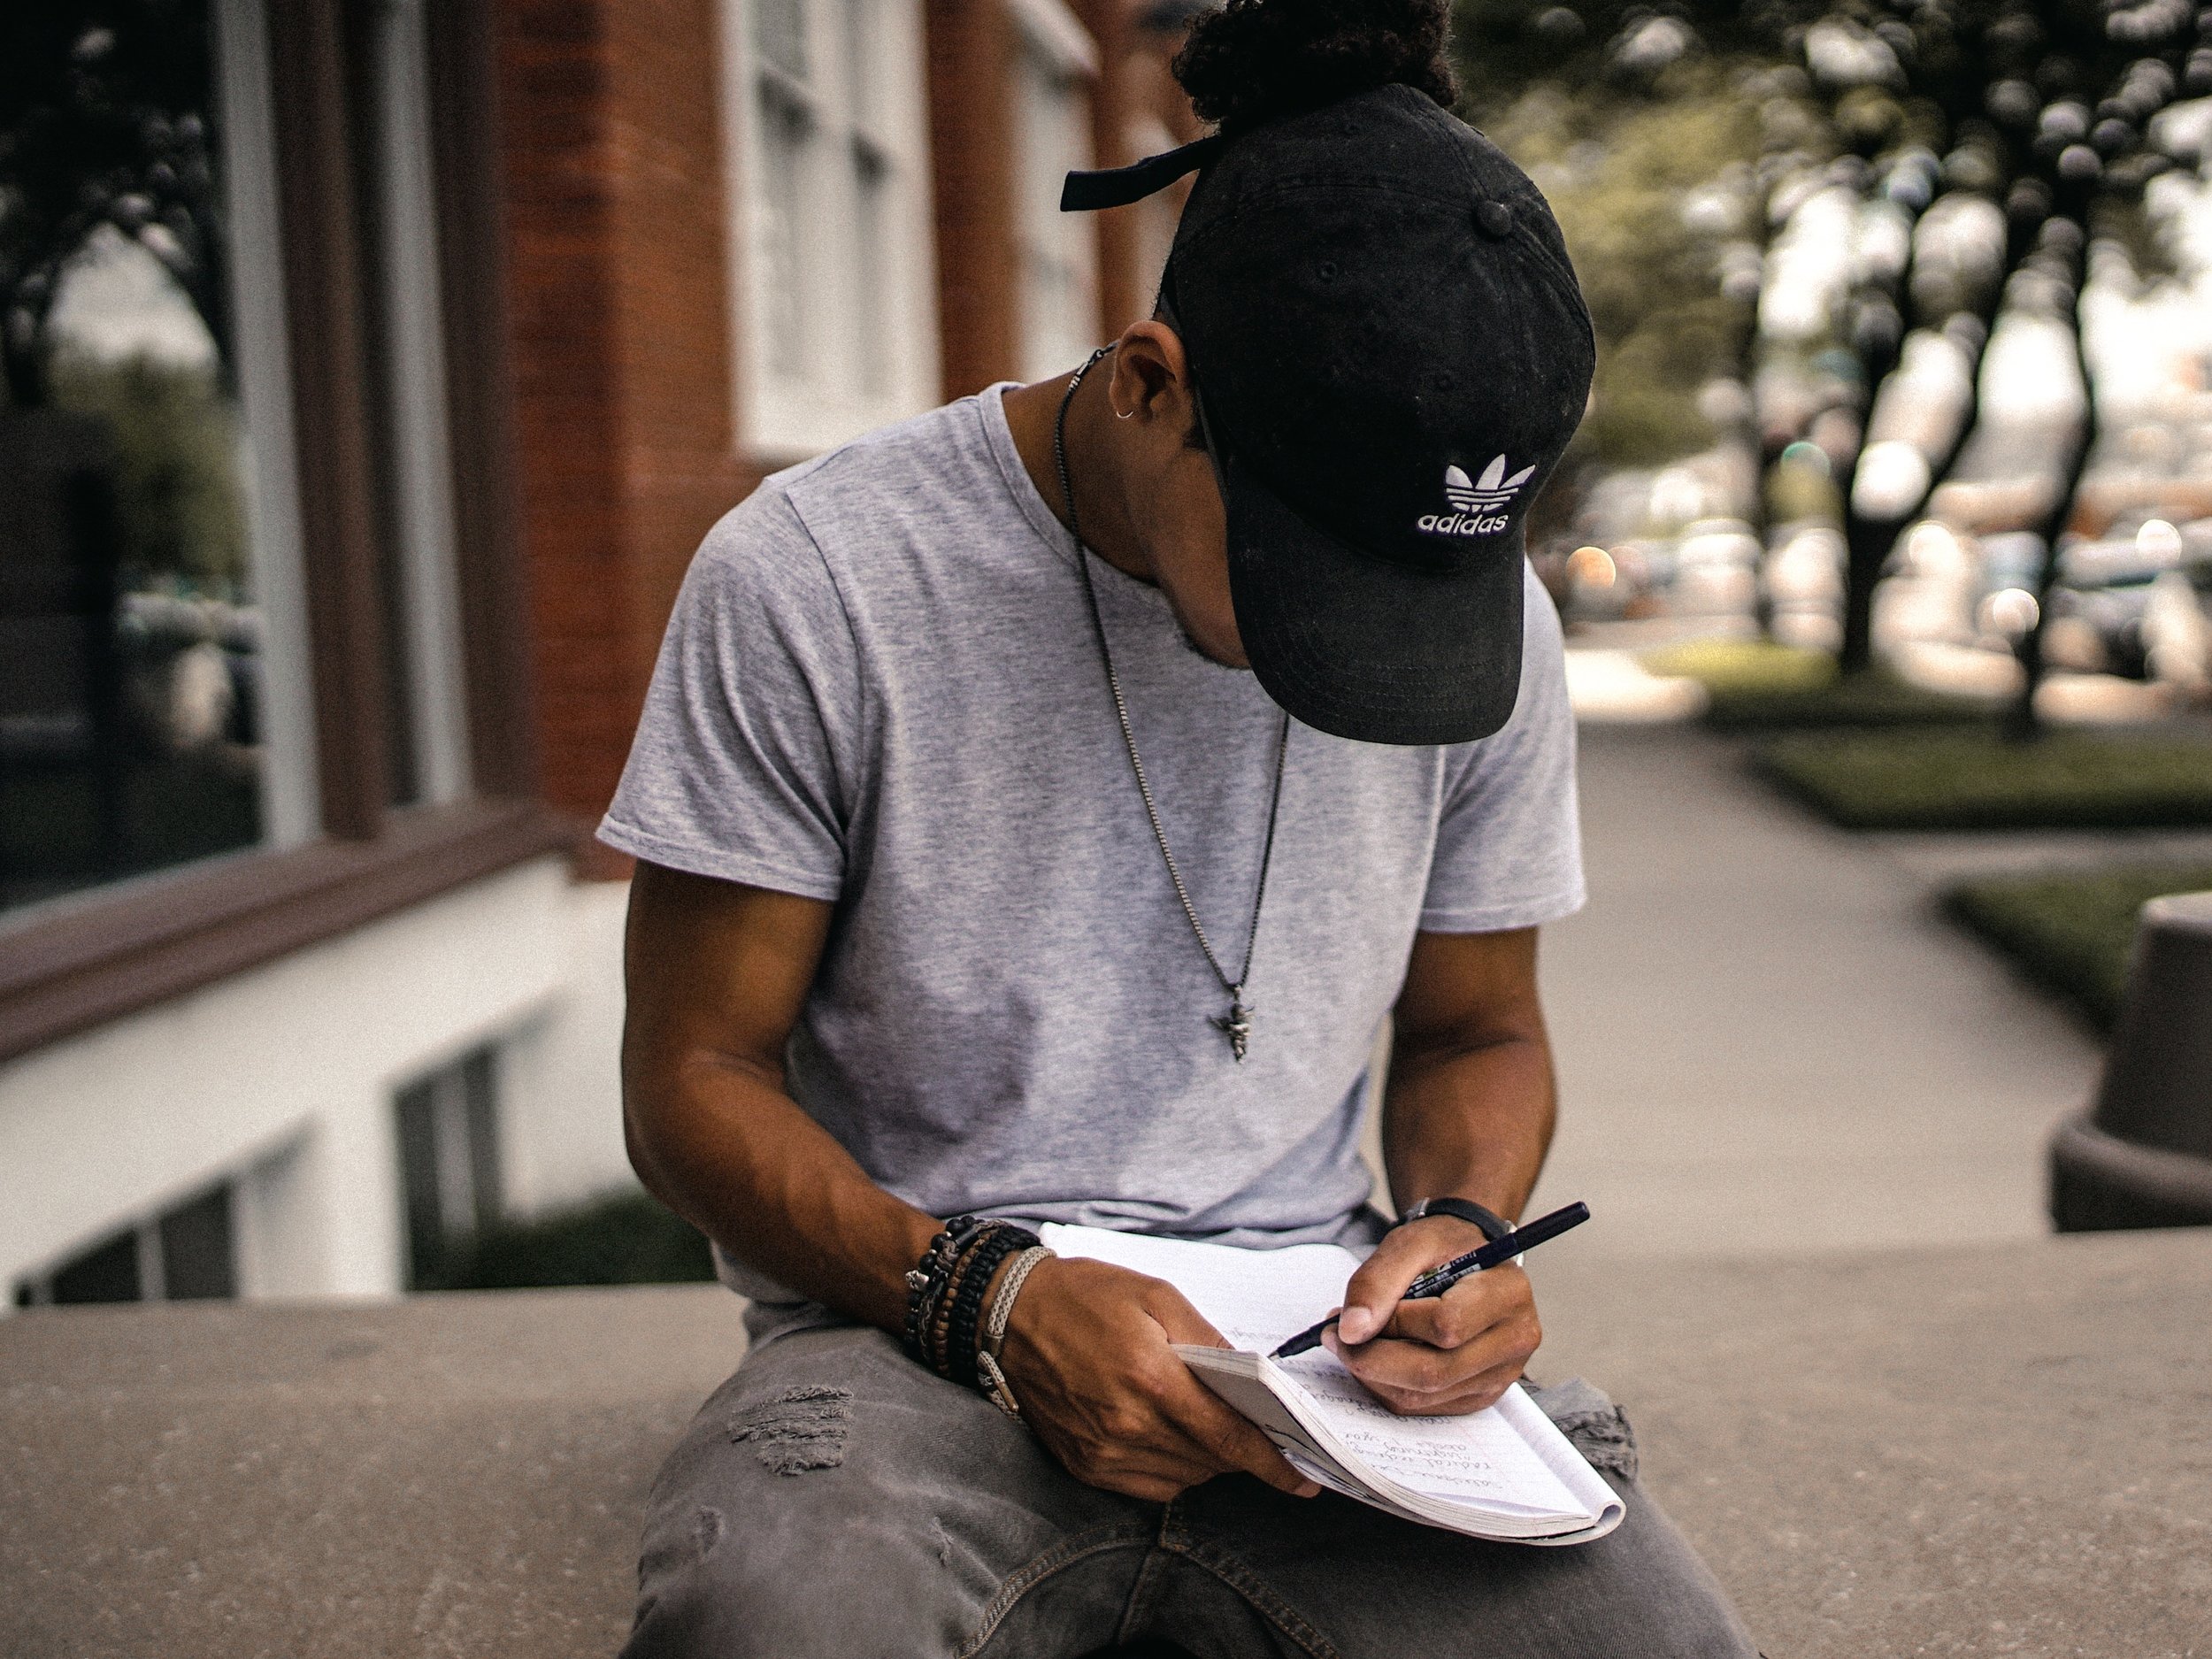 Man sitting writing in his journal